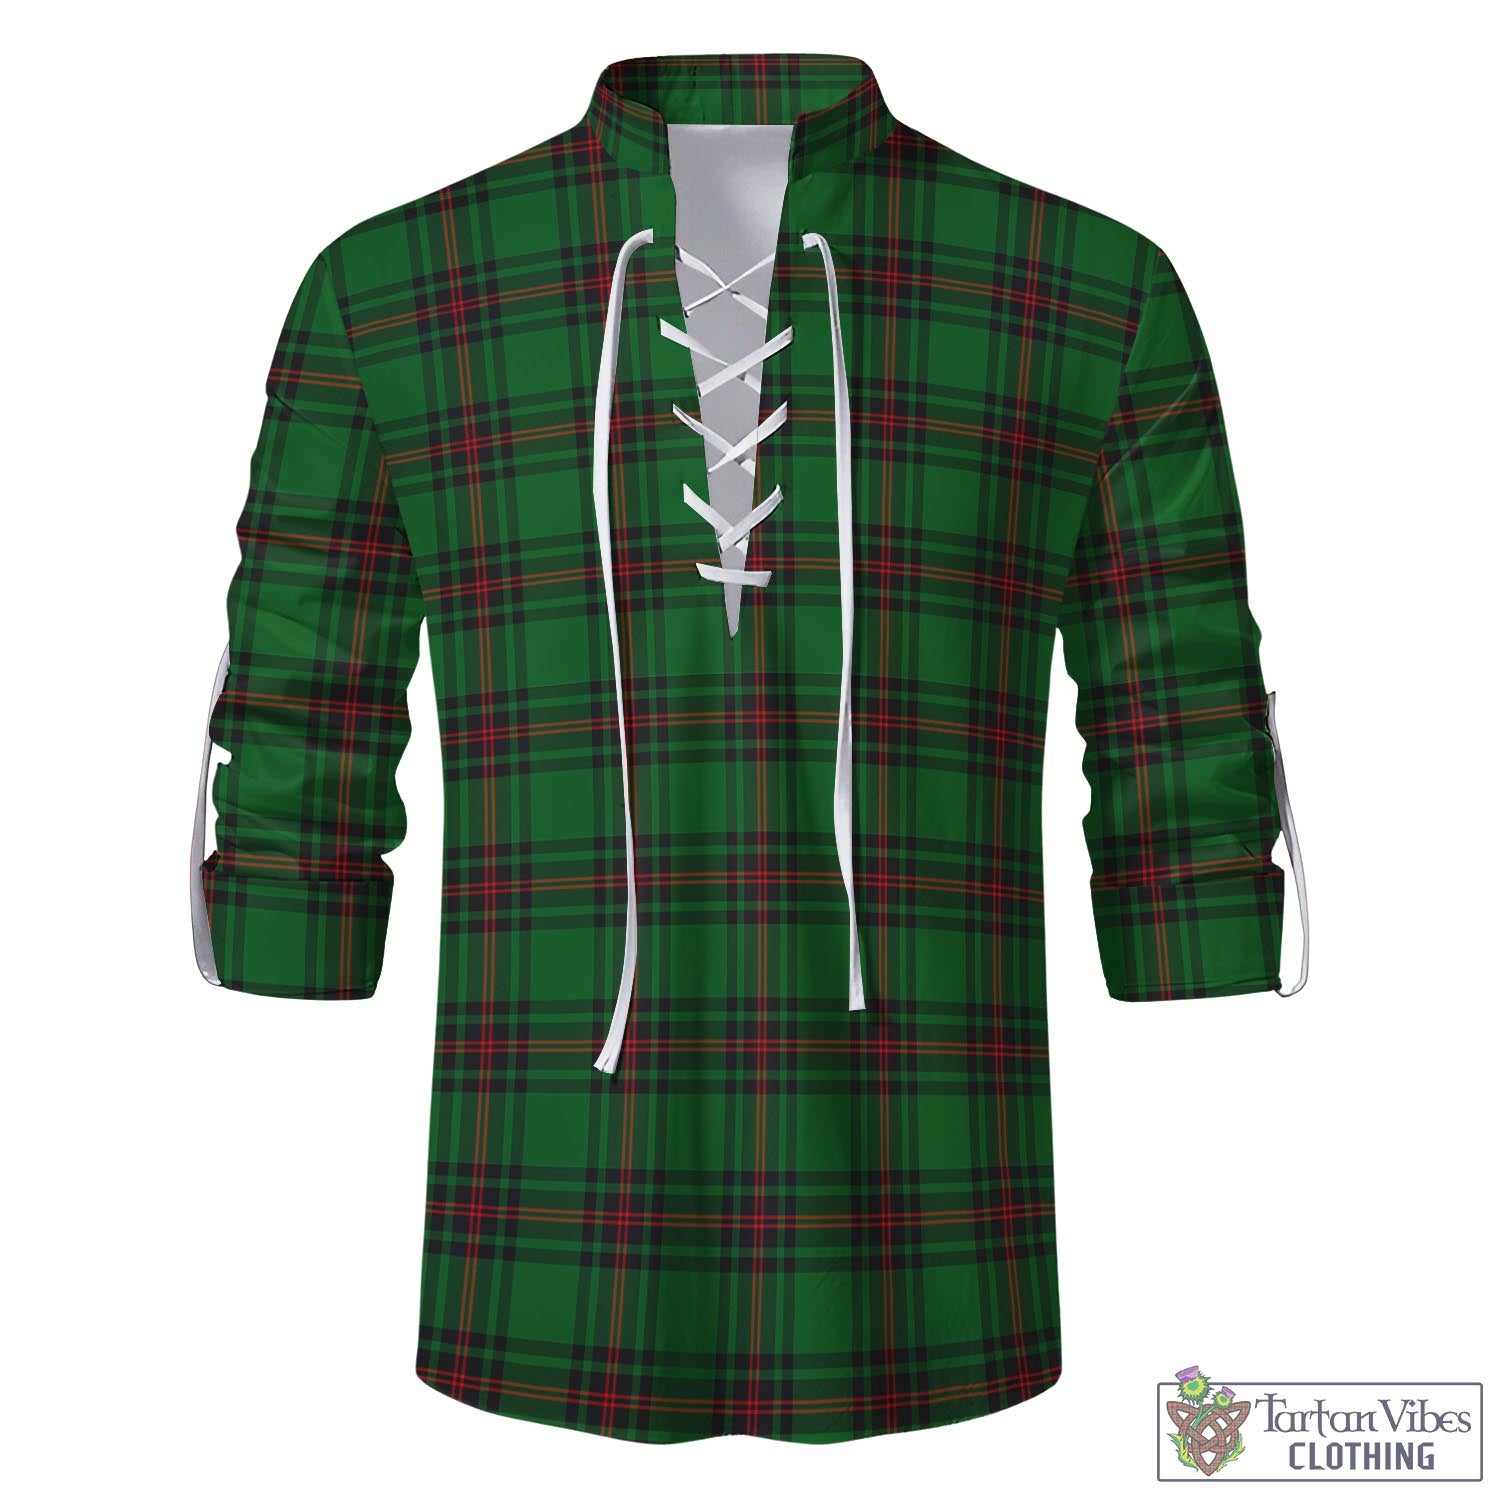 Tartan Vibes Clothing Primrose Tartan Men's Scottish Traditional Jacobite Ghillie Kilt Shirt